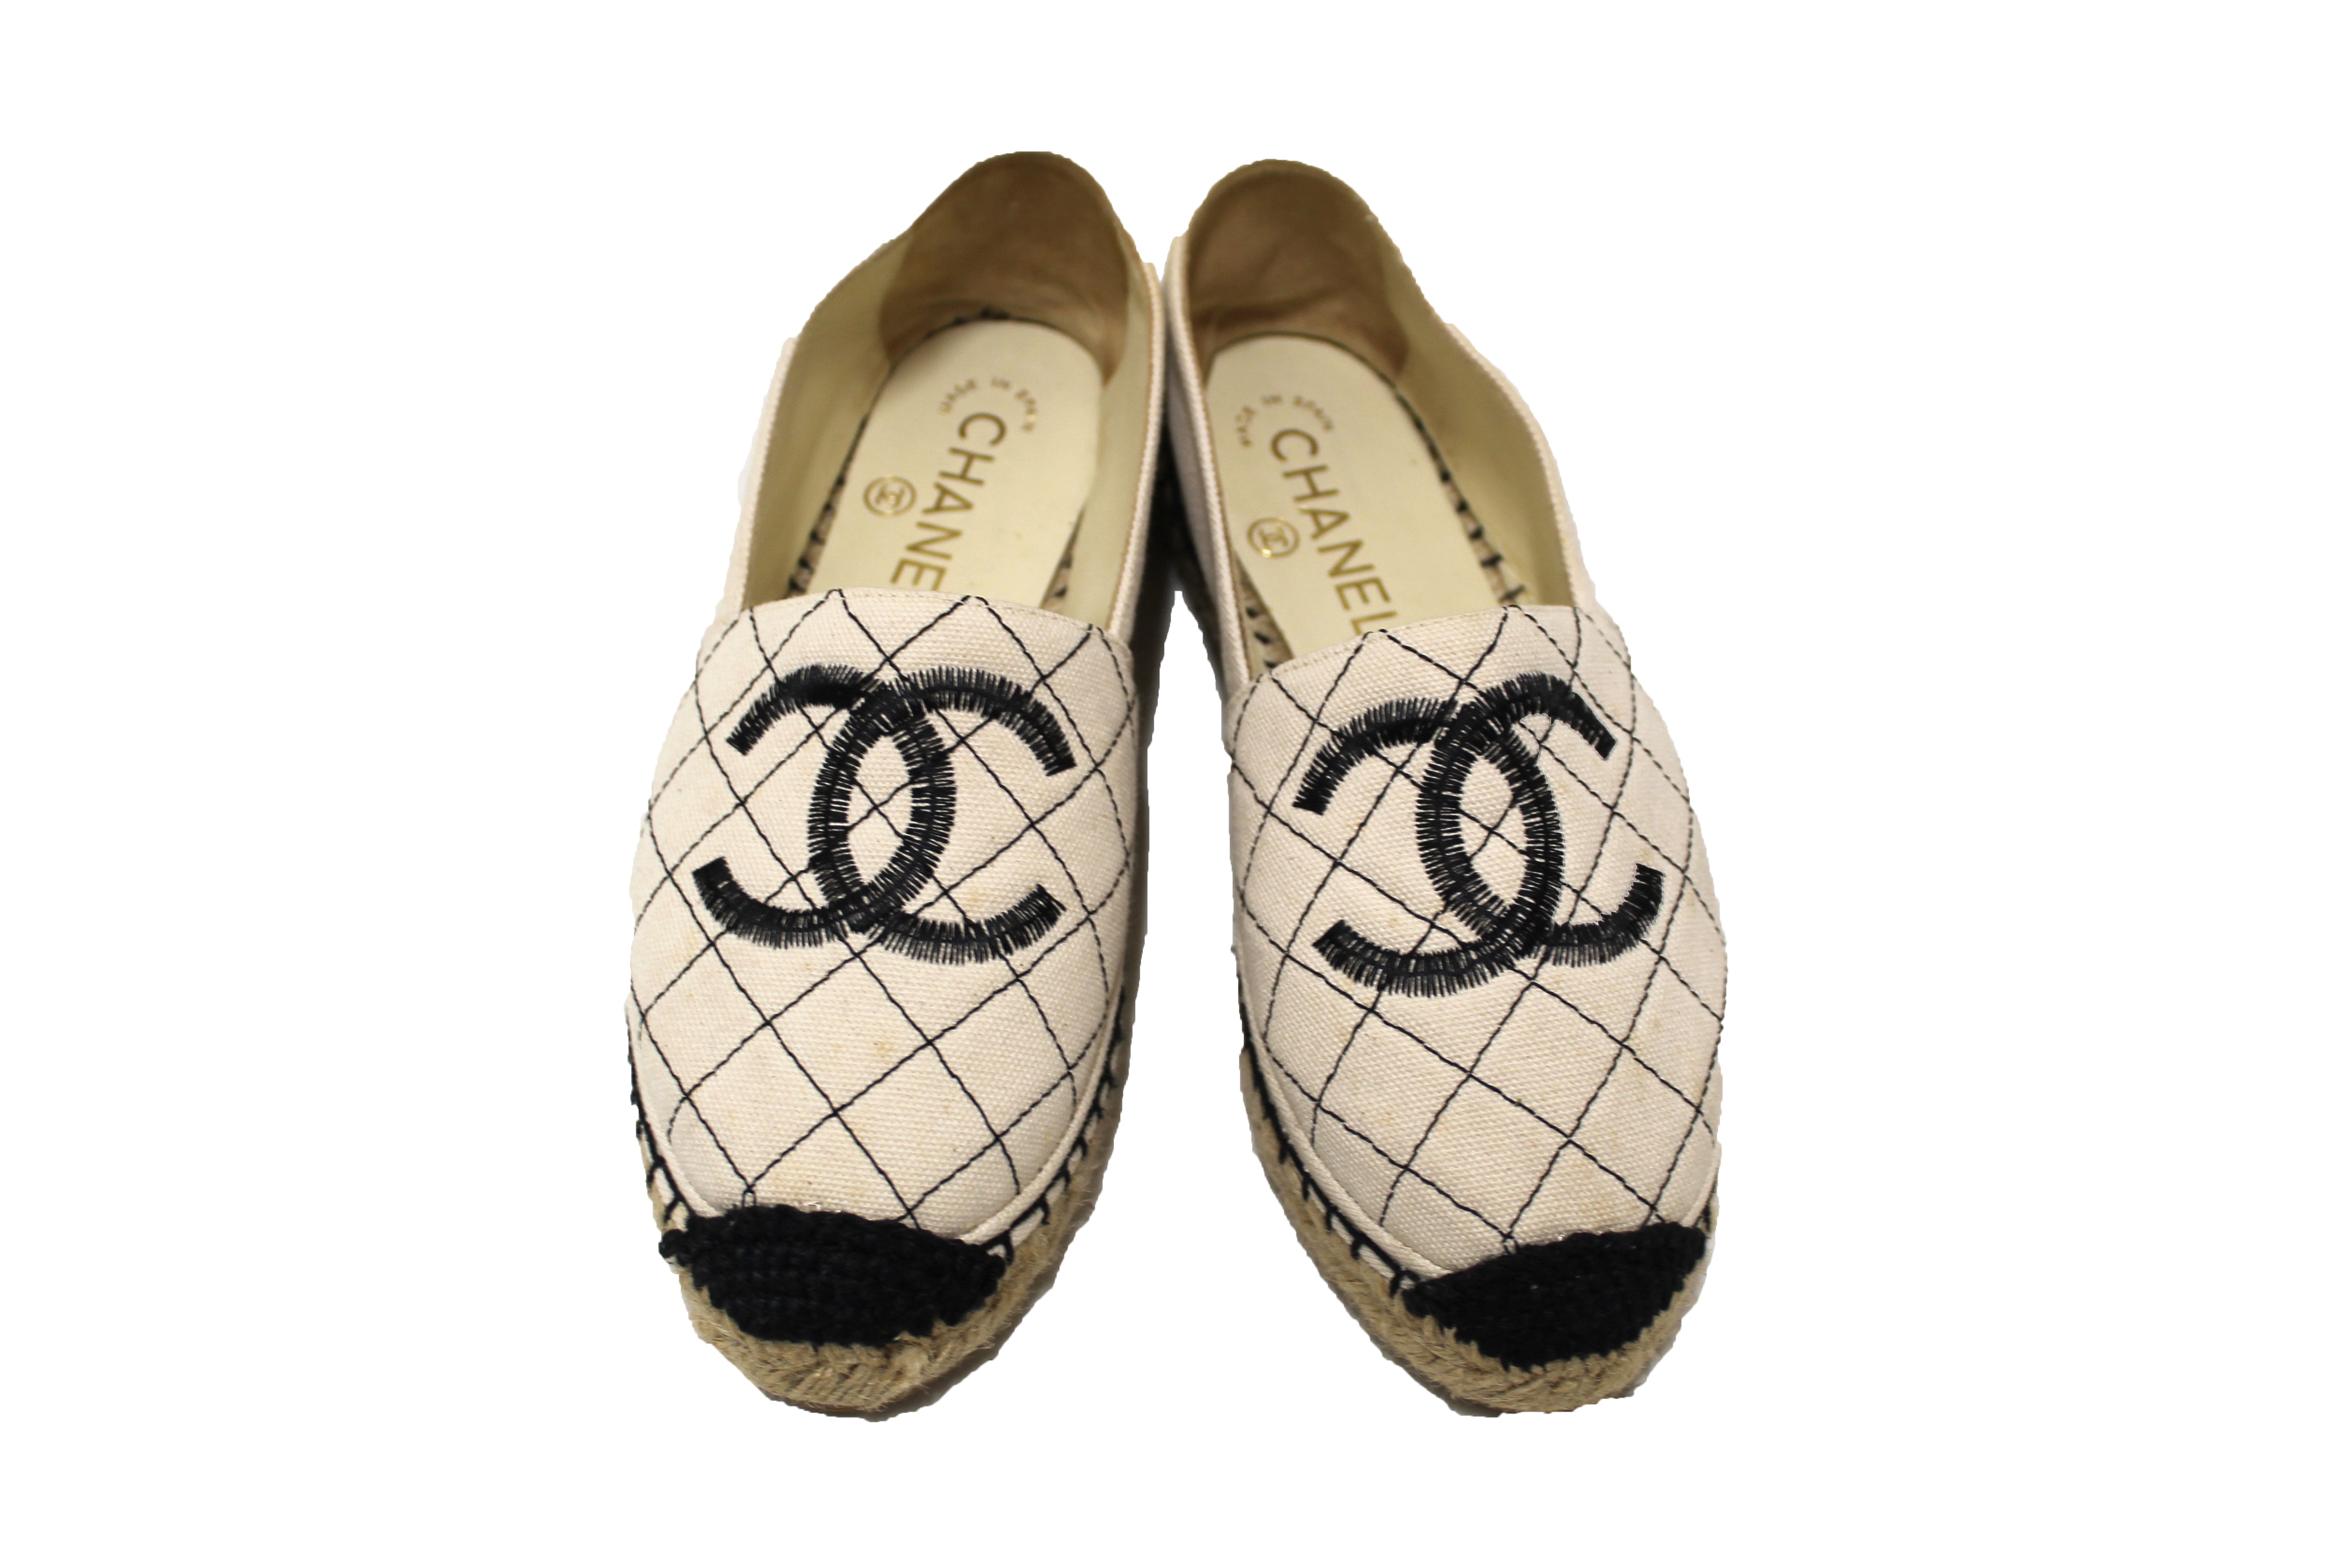 Authentic Chanel Stitched Espadrilles Shoes